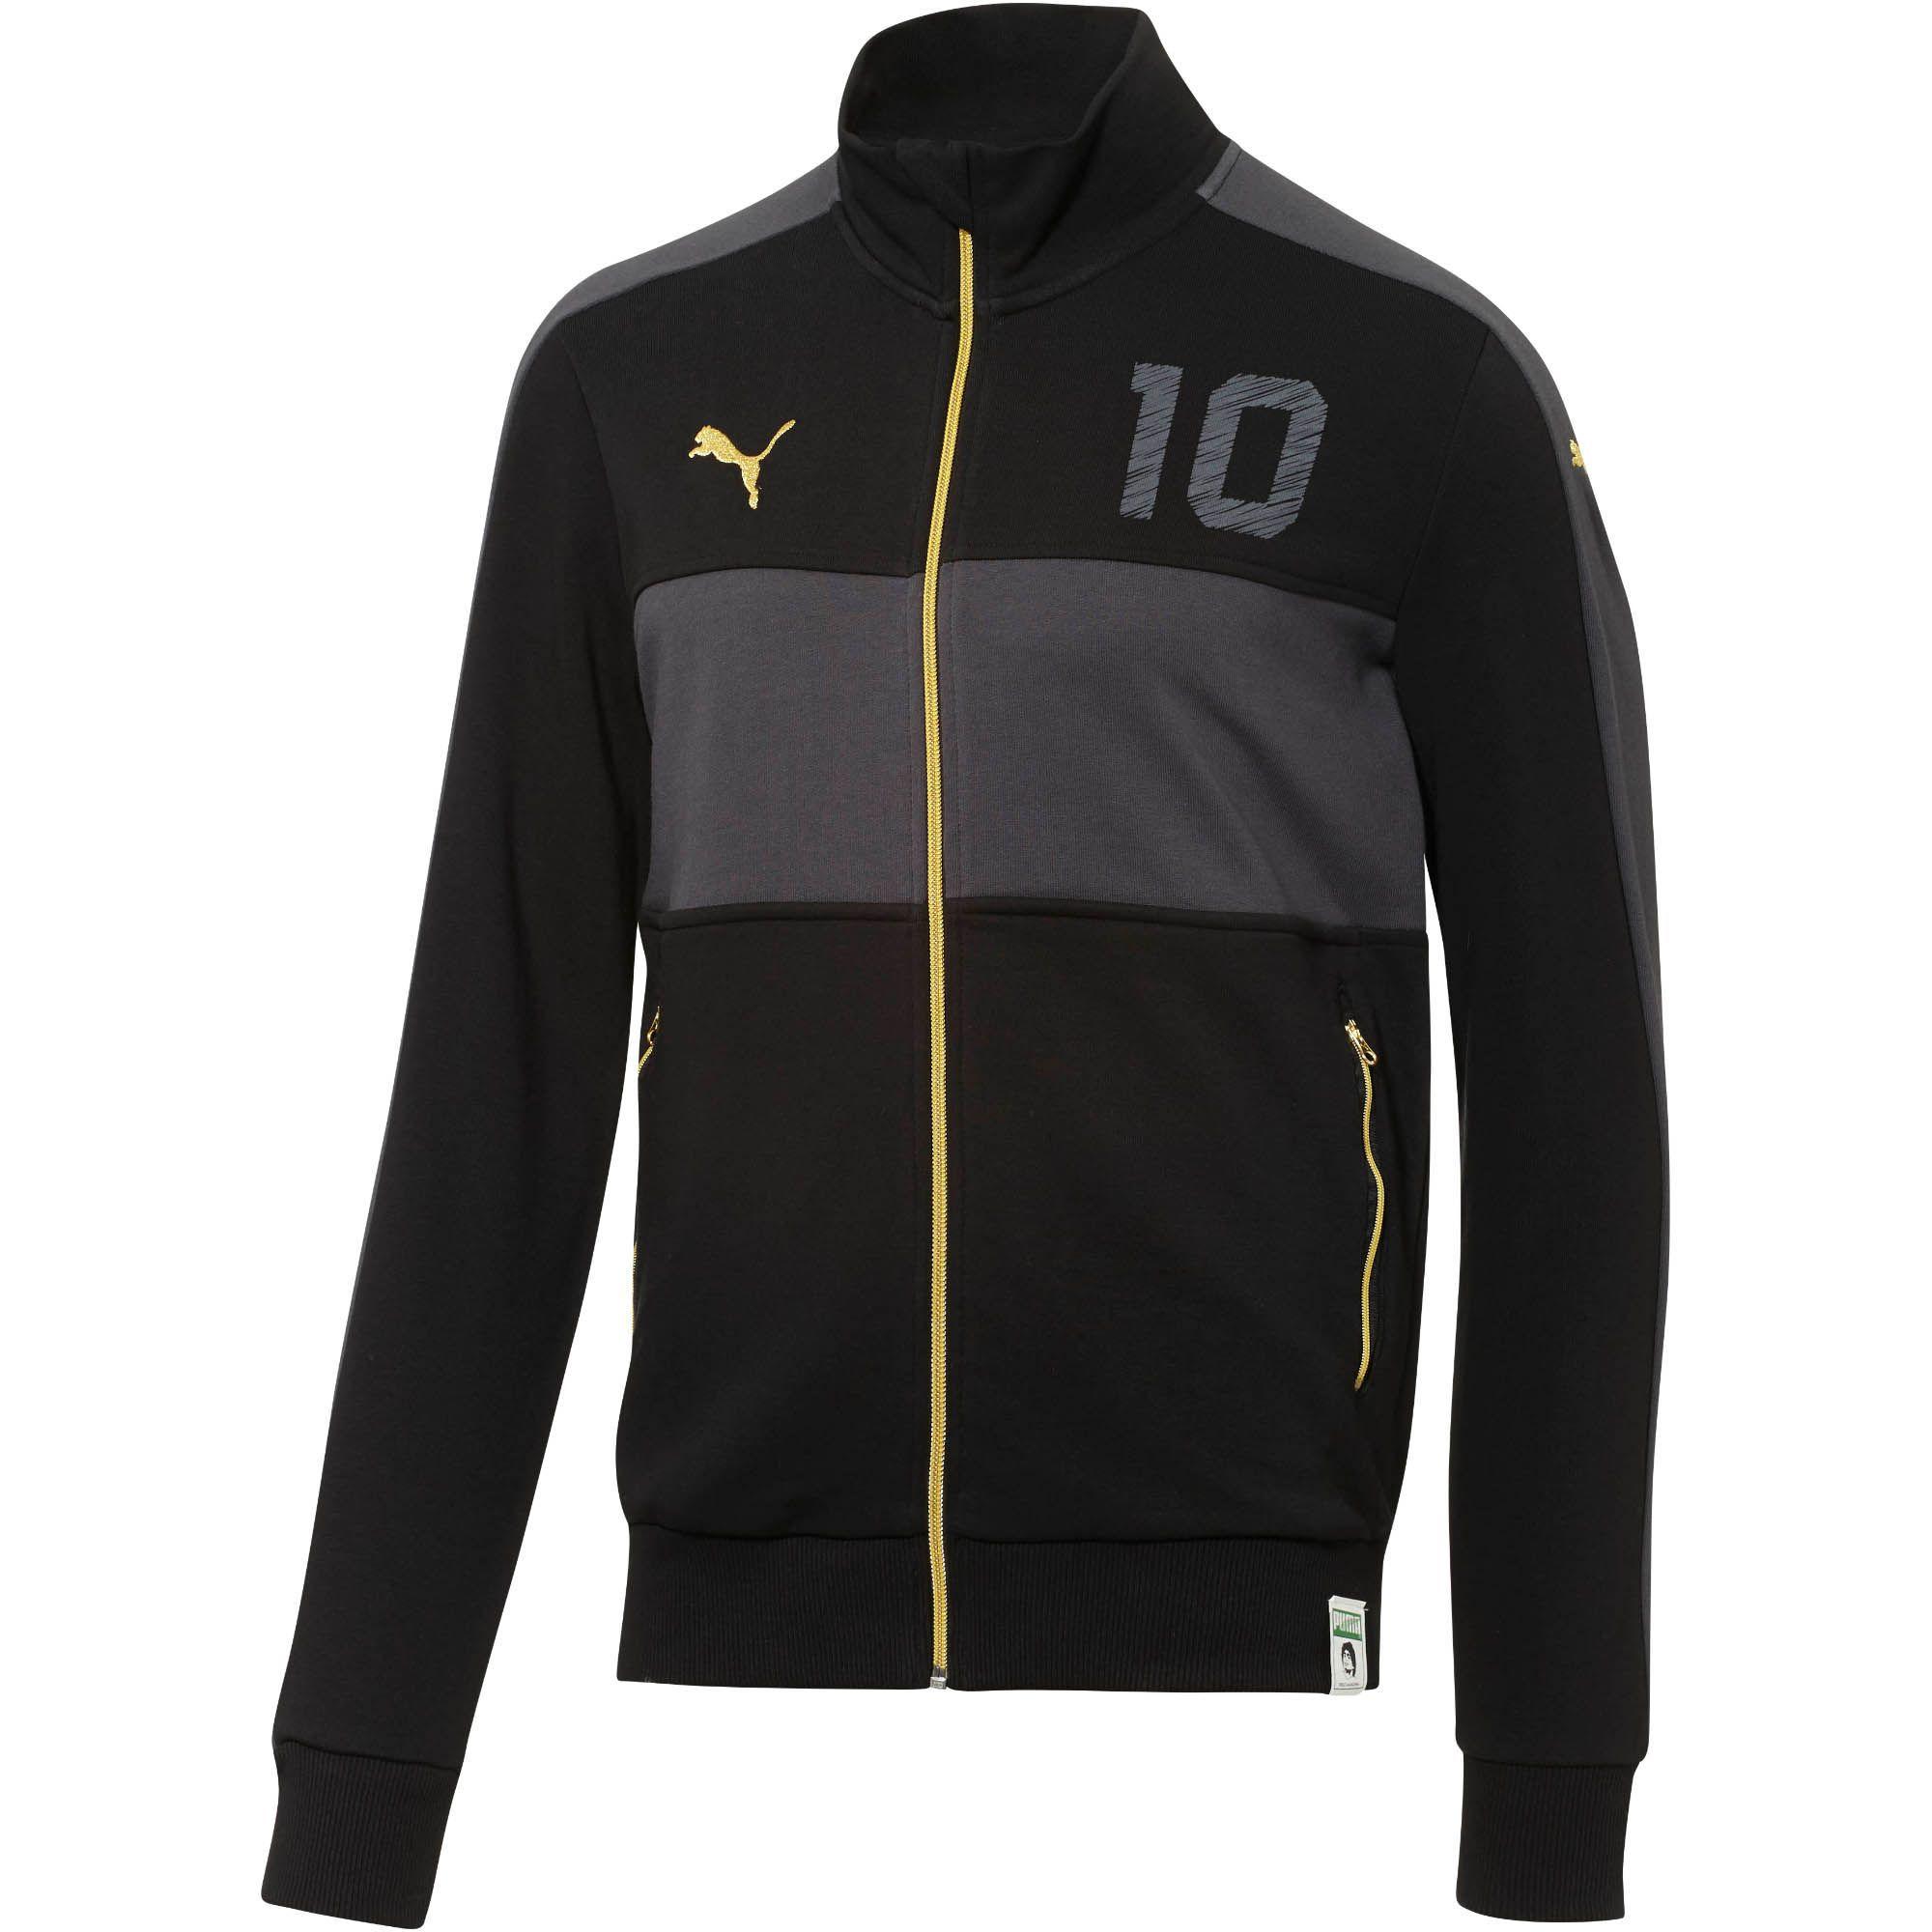 Lyst - Puma Maradona Limited Edition Number 10 Jacket in Black for Men